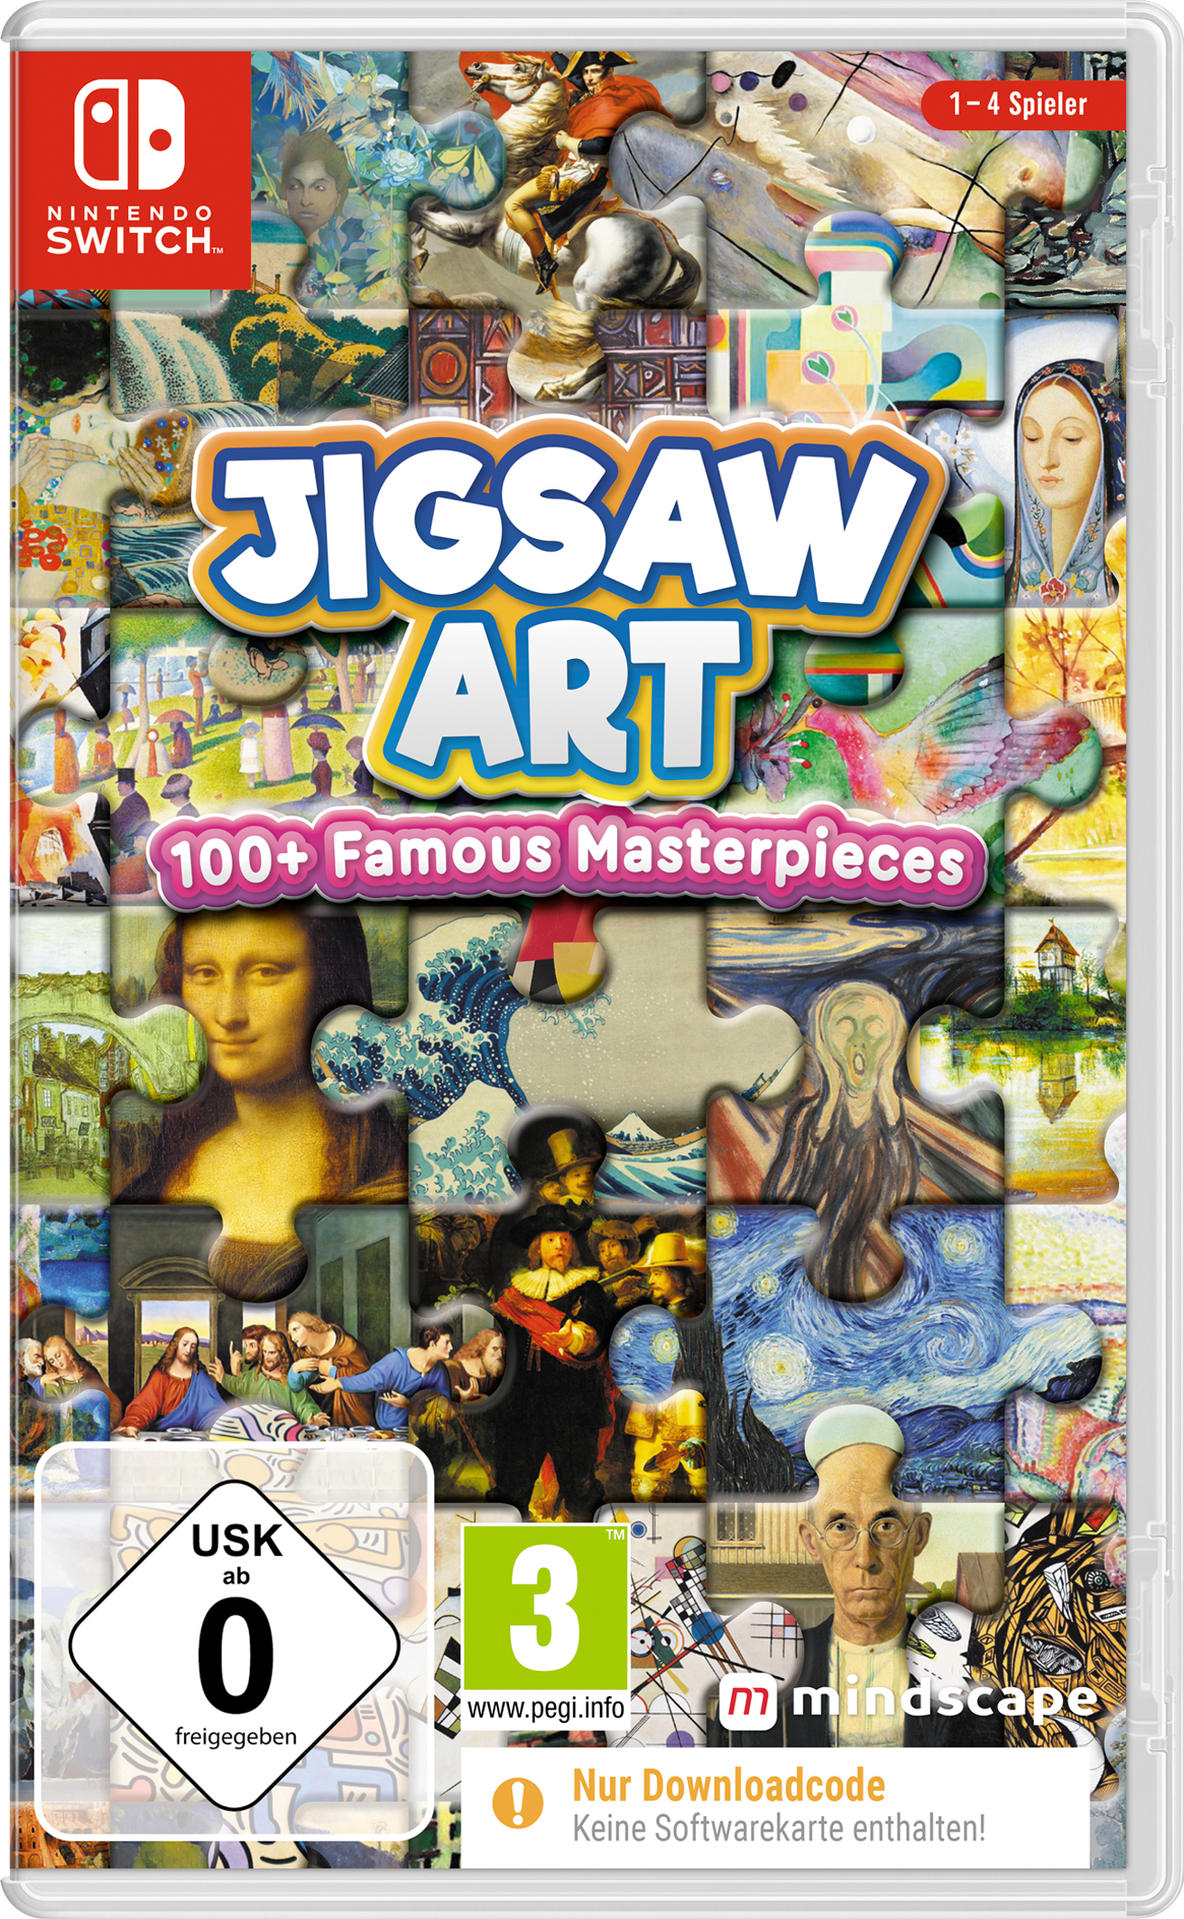 - [Nintendo Famous 100+ Masterpieces Art: Switch] Jigsaw